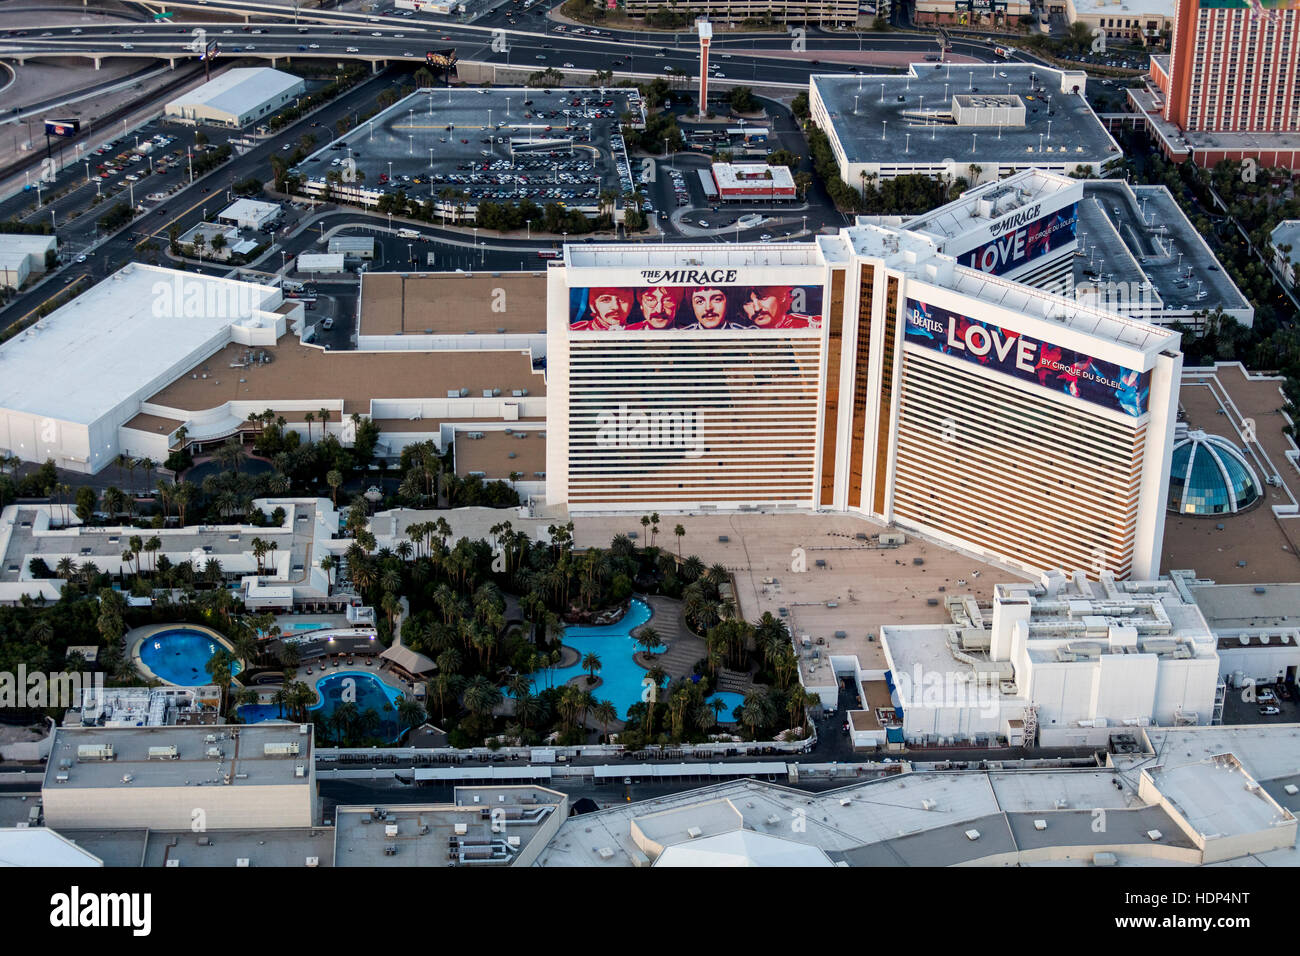 Aerial view the Mirage Hotel on the Strip, Las Vegas, Stock Photo - Alamy